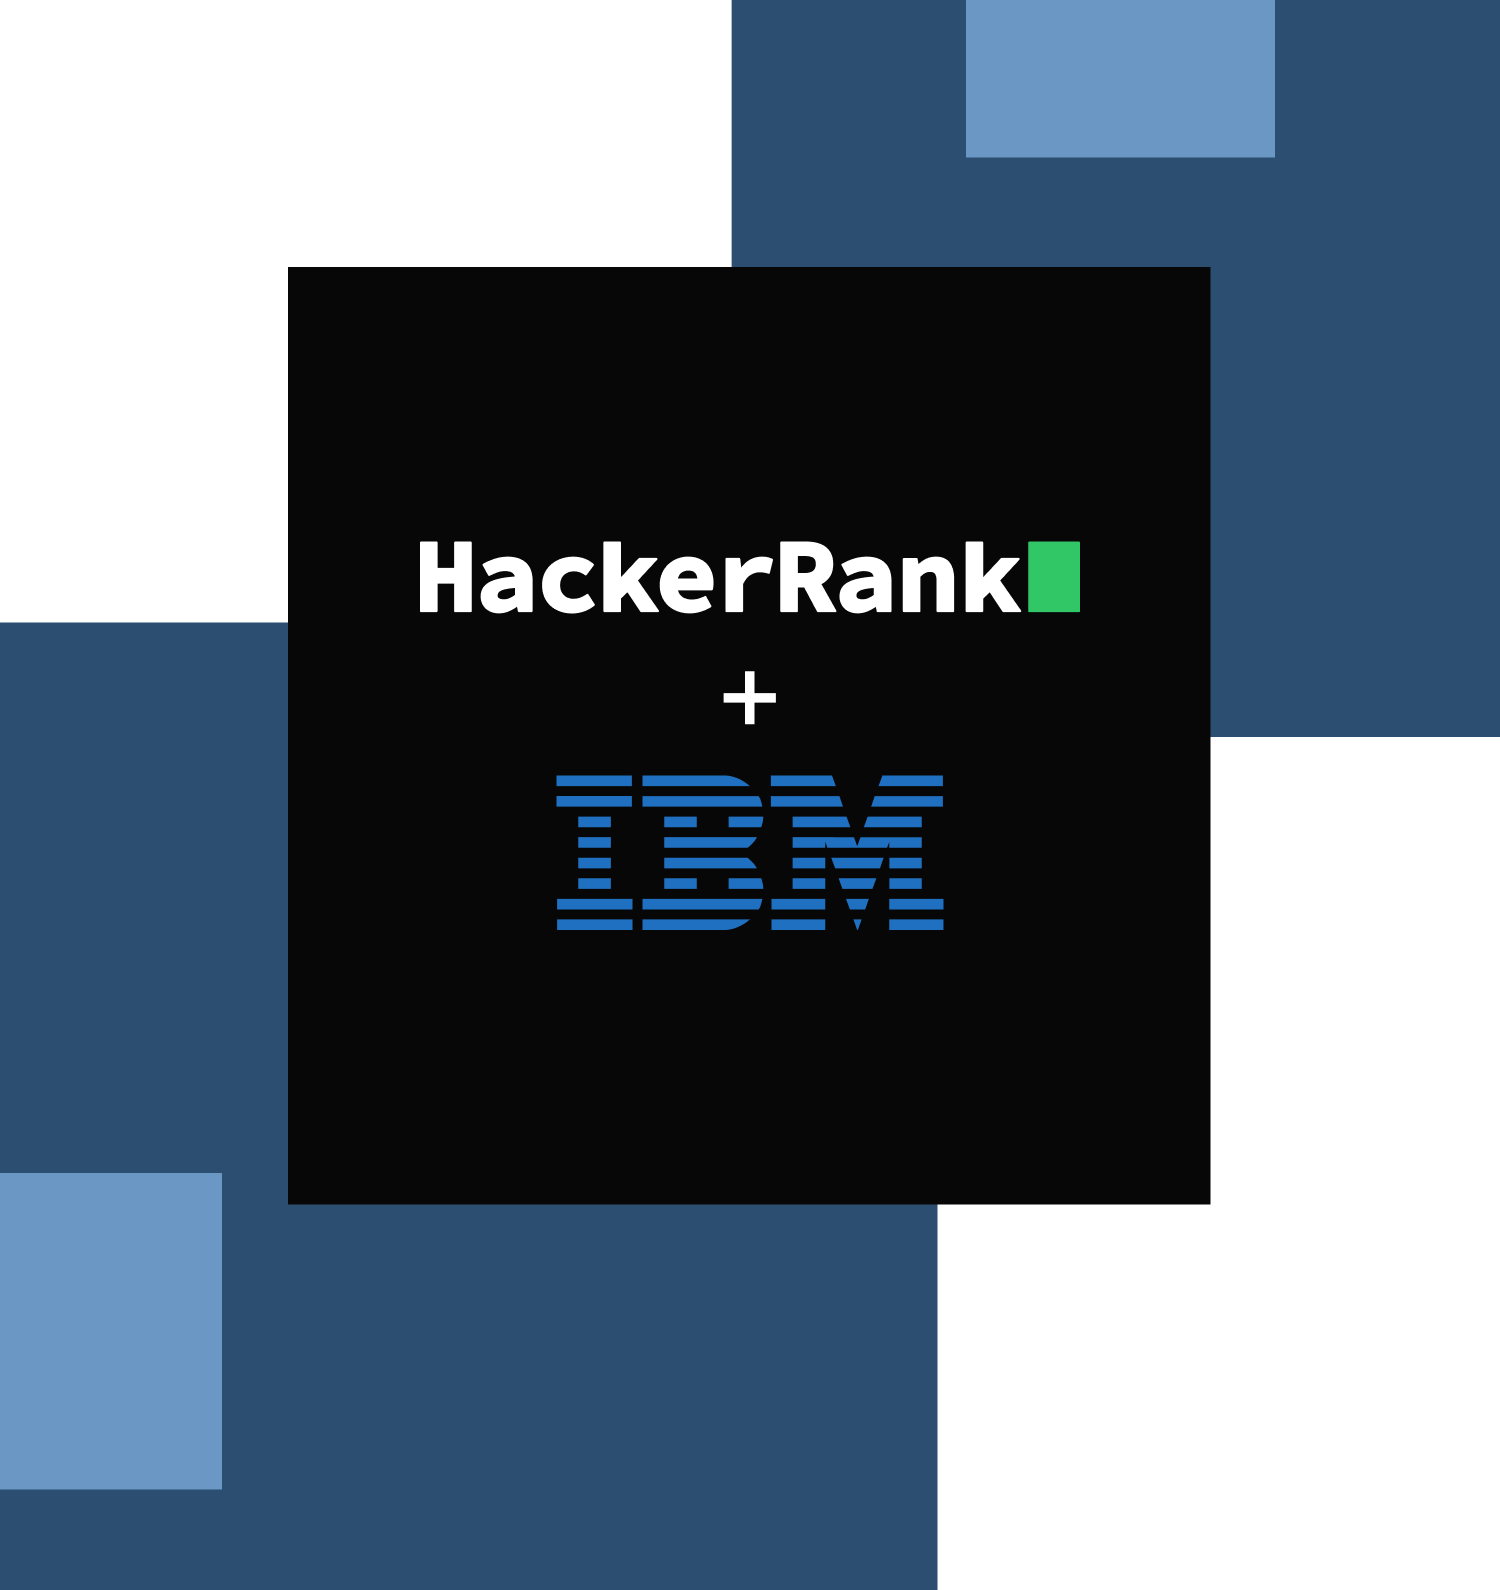 IBM using HackerRank to hire skill fit candidates